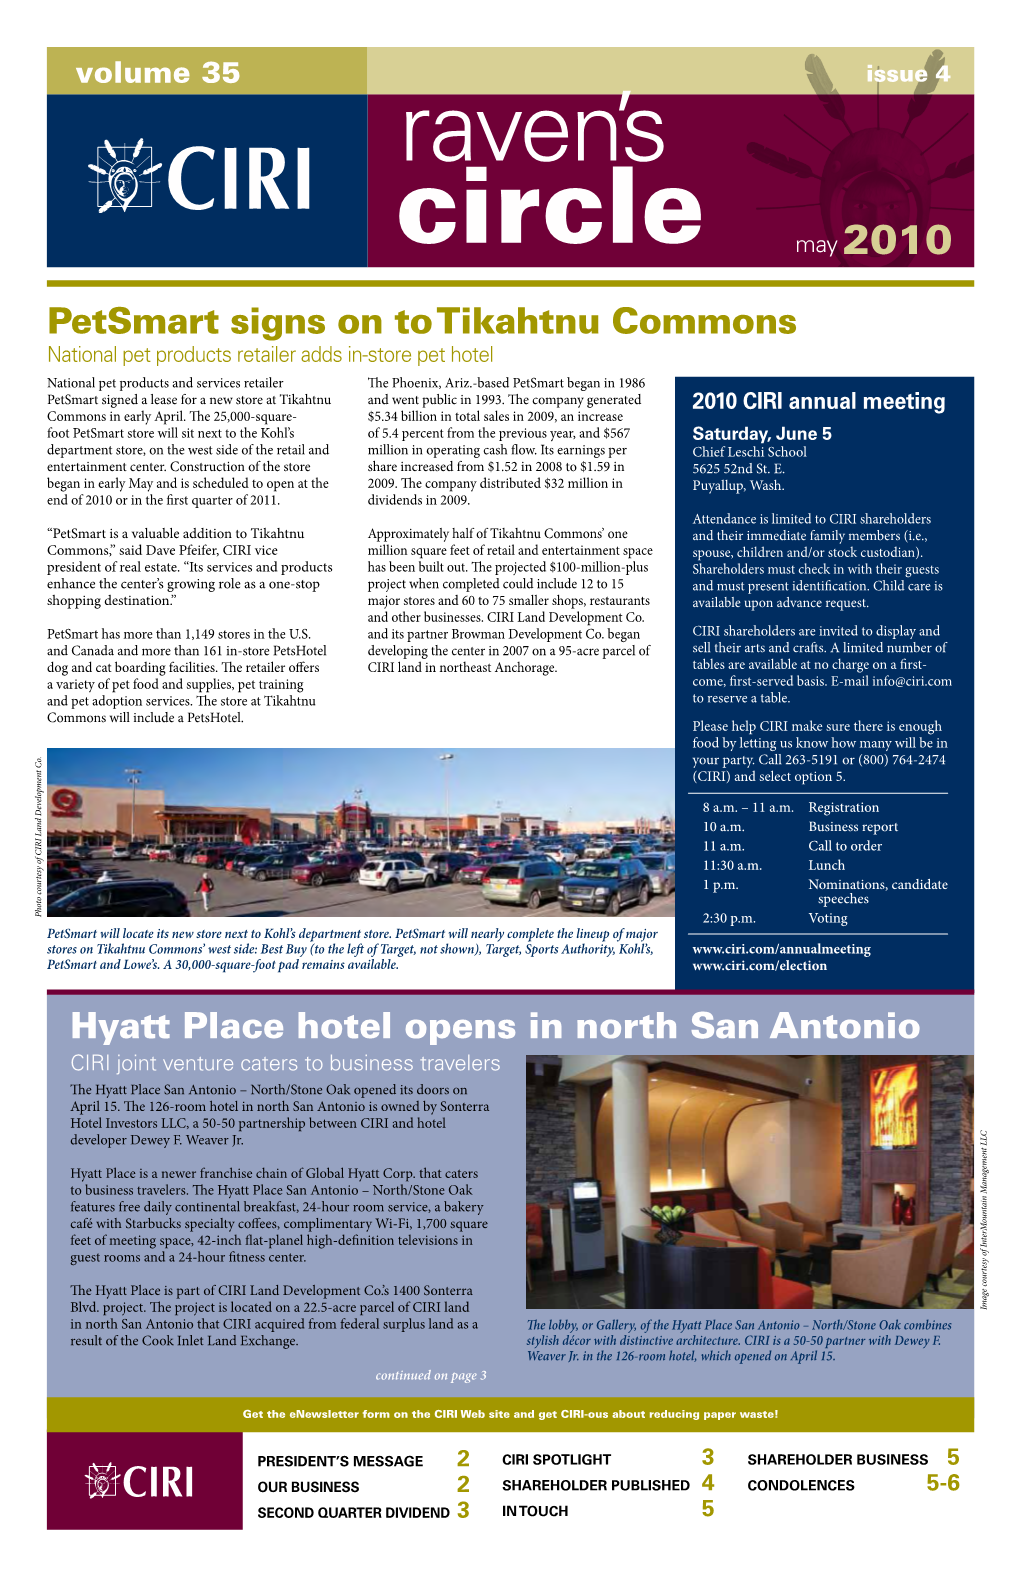 Petsmart Signs on to Tikahtnu Commons Hyatt Place Hotel Opens